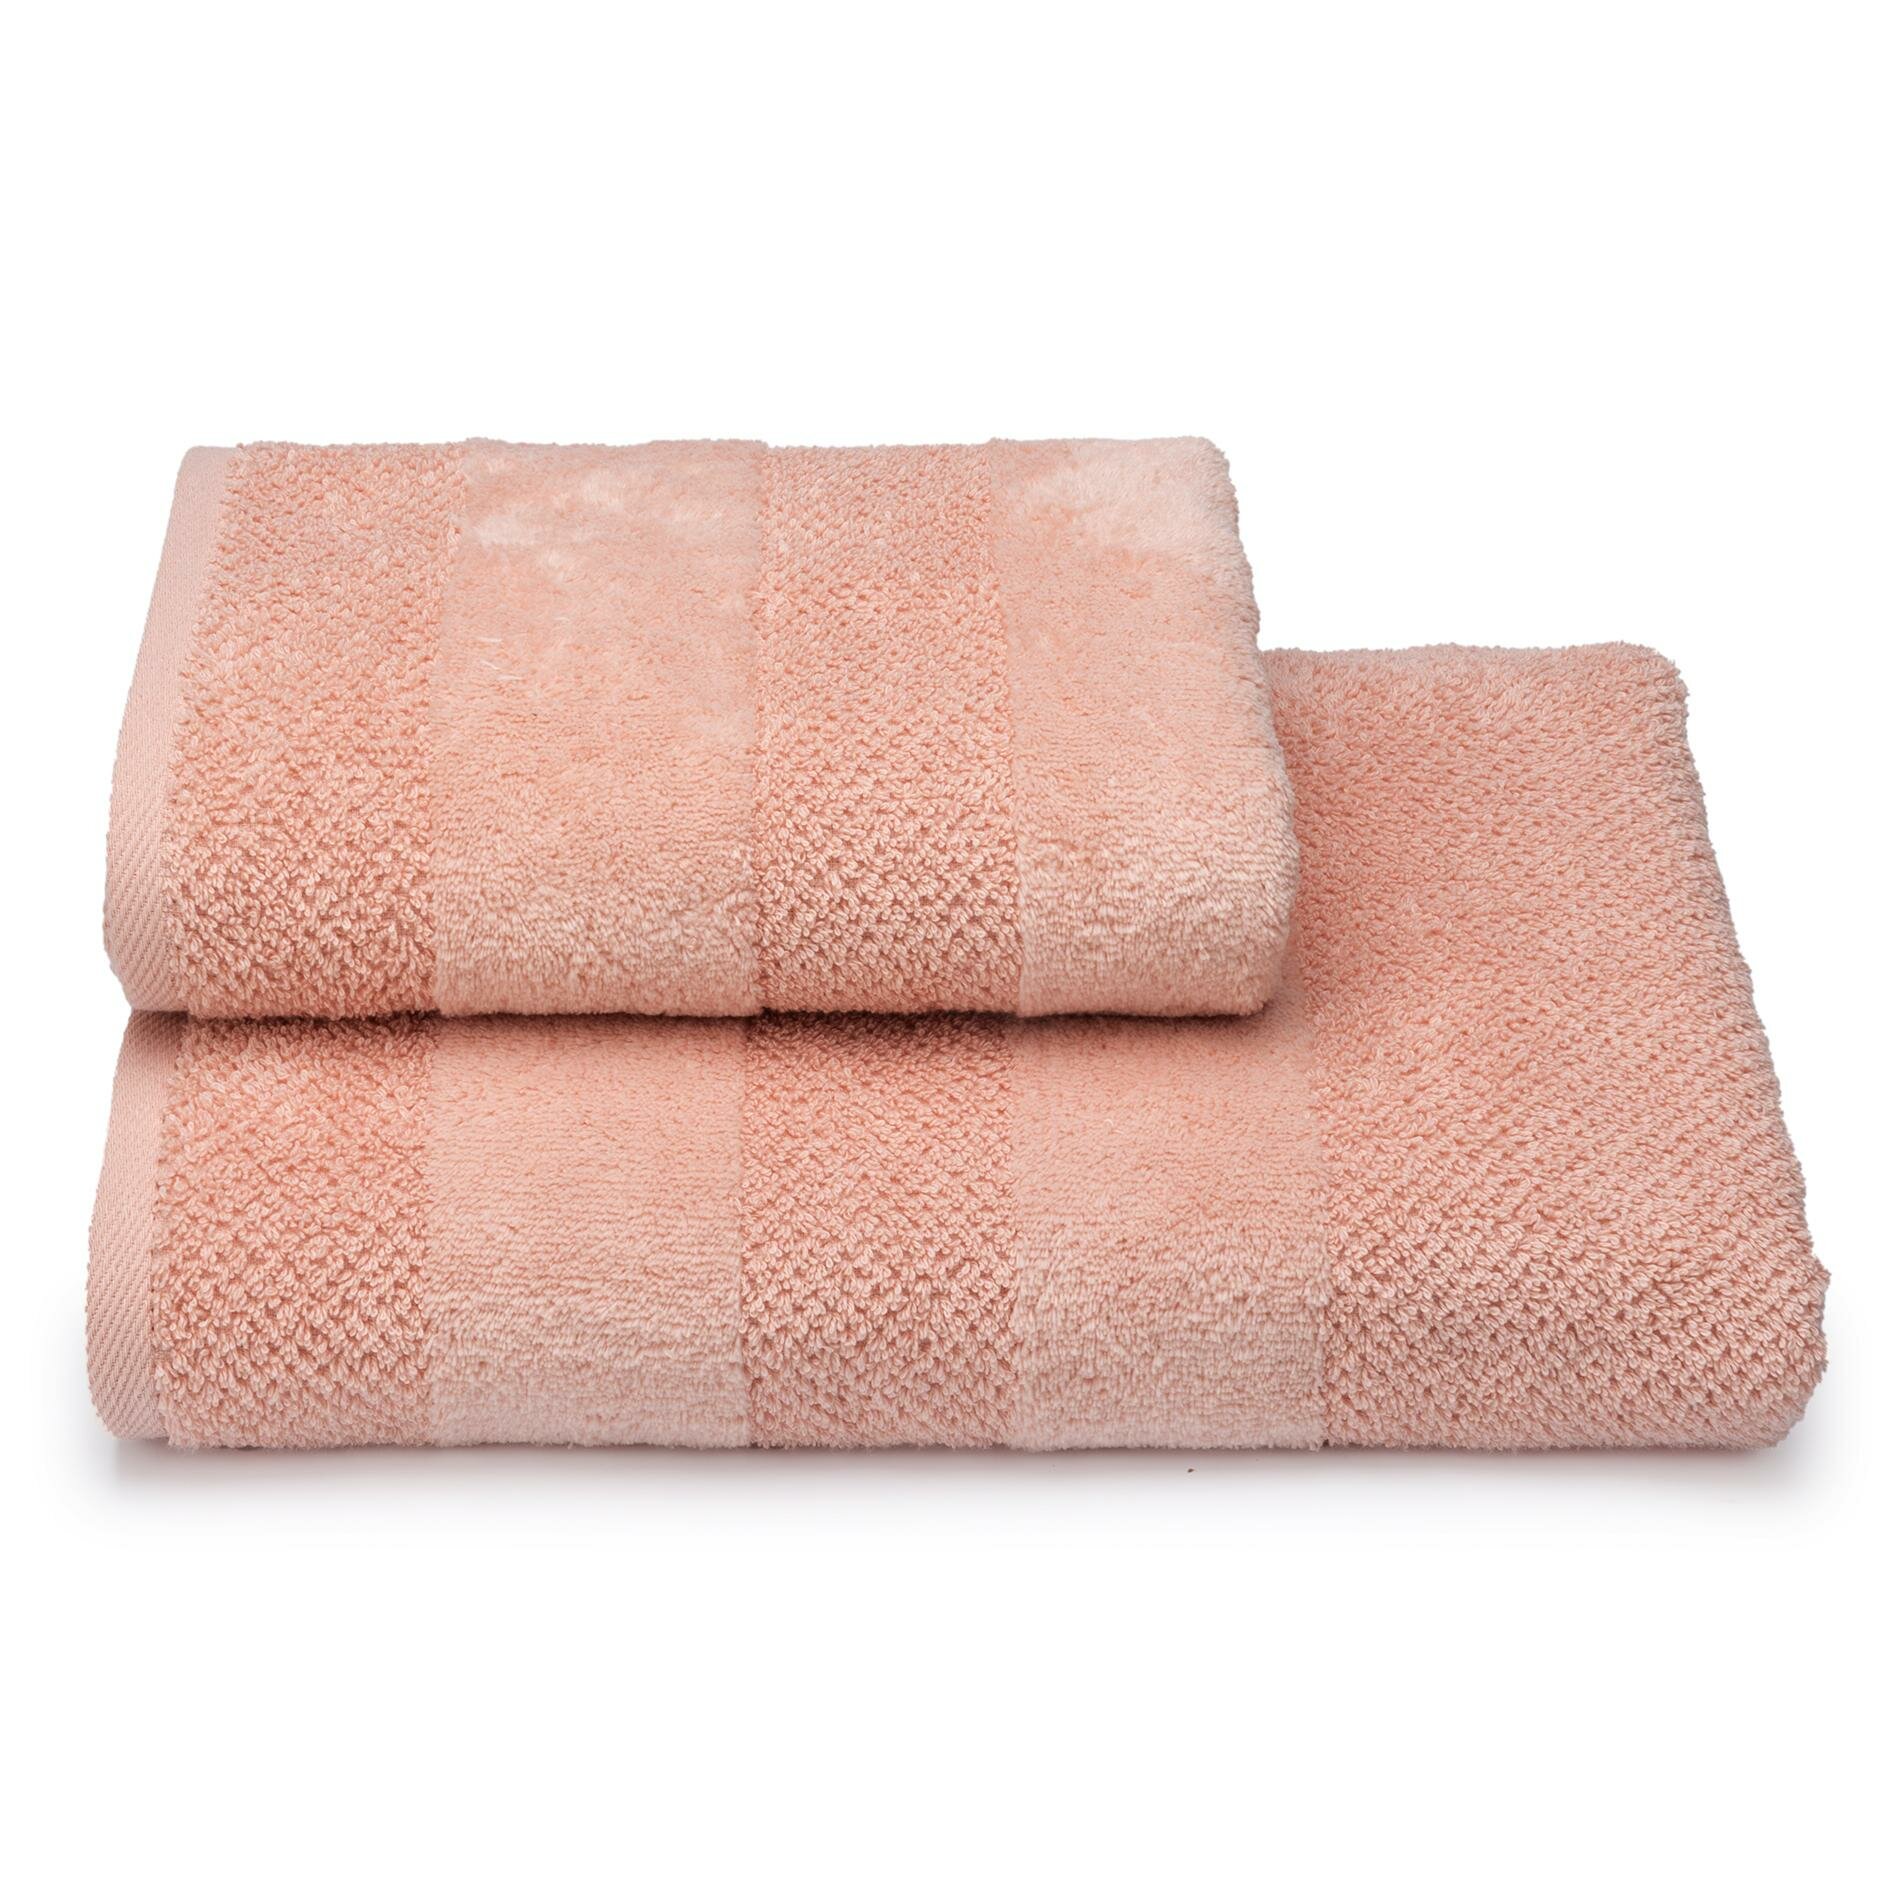 Полотенце махровое 70х130 см для ванной, лица и рук, Cleanelly Heat цвет персиковый, 1 штука